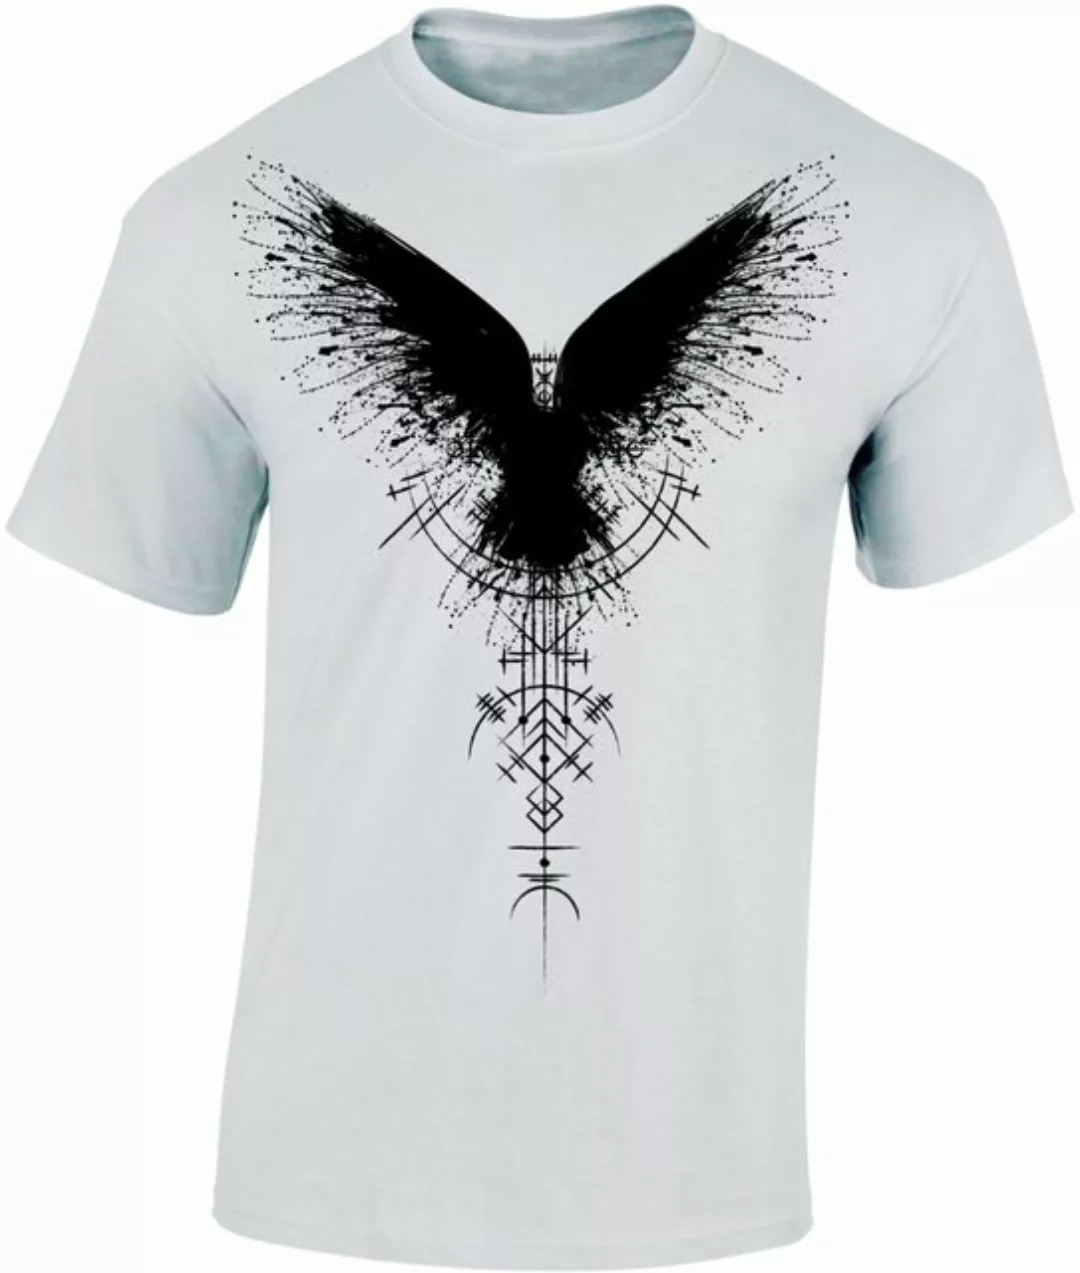 Baddery Print-Shirt Wikinger Tshirt, Schattenrabe, Viking Shirt Männer auch günstig online kaufen